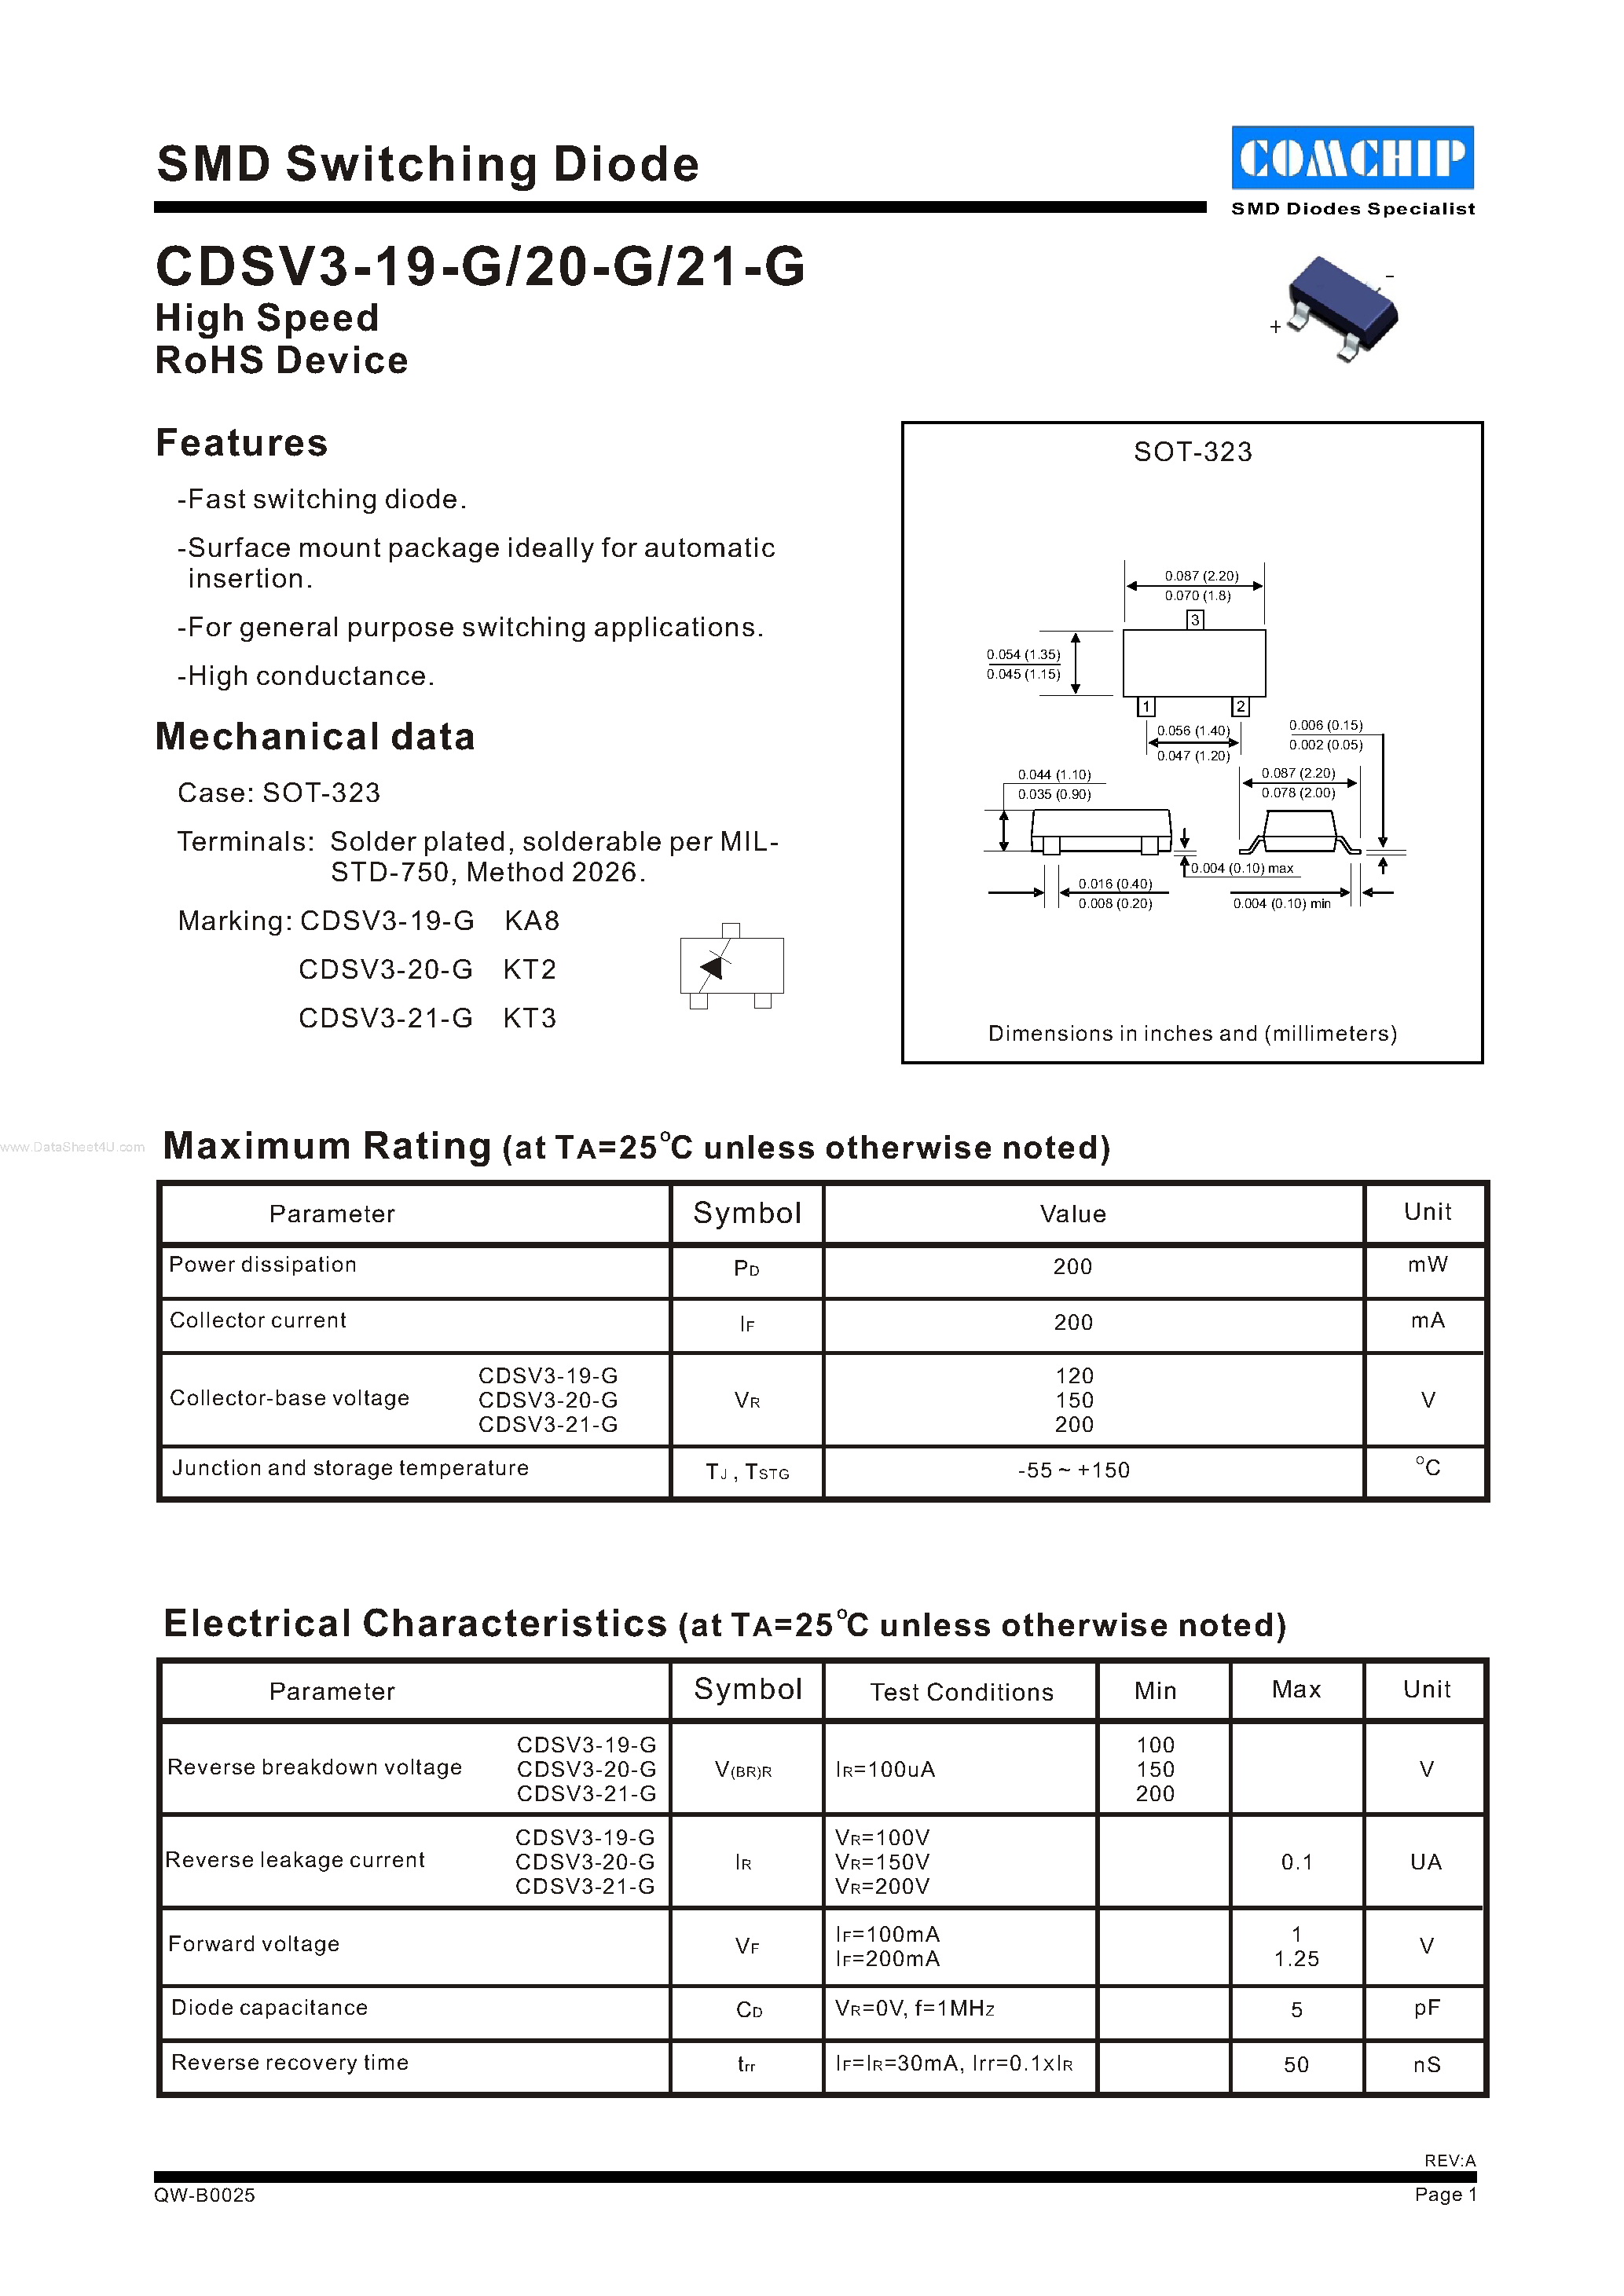 Datasheet CDSV3-19-G - (CDSV3-19-G - CDSV3-21-G) SMD Switching Diode page 1